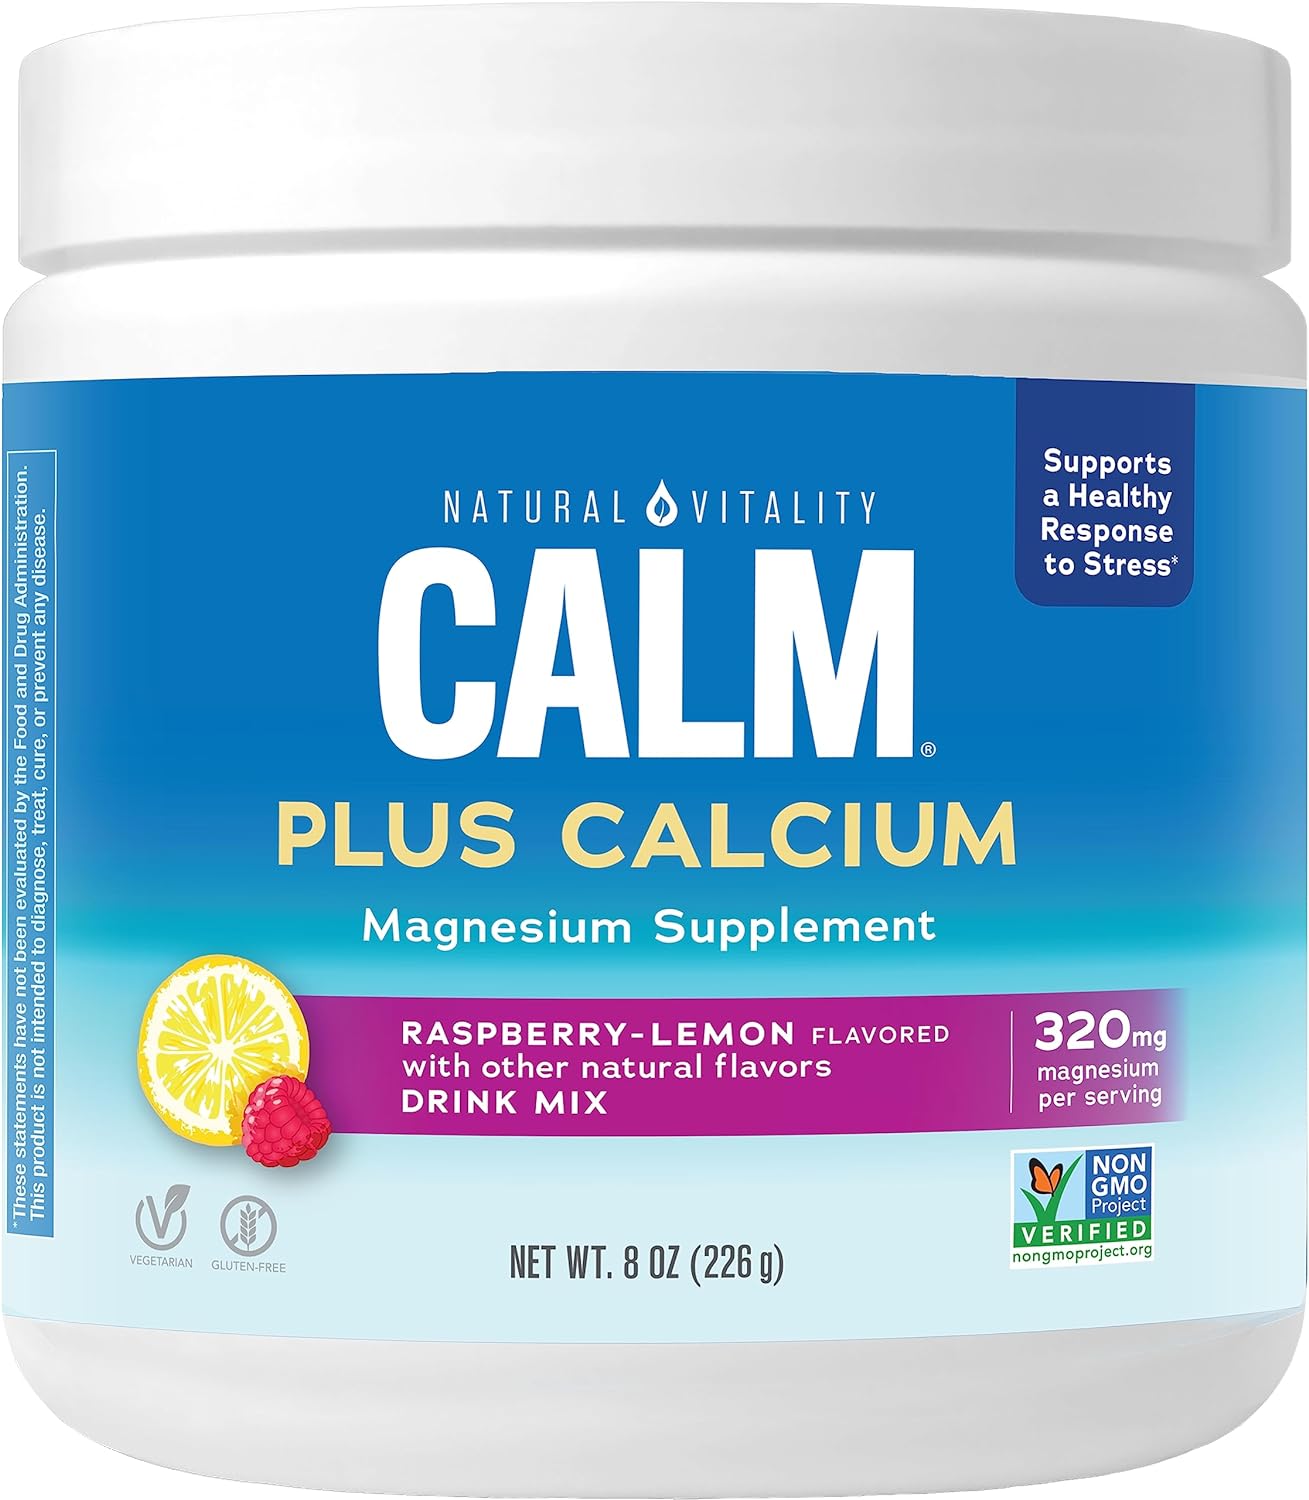 Natural Vitality CALM Magnesium Supplement Drink Mix Plus Calcium, Anti-Stress Drink Mix Powder, With Calcium, Vegetarian & Non-GMO, Raspberry Lemon, 8 oz